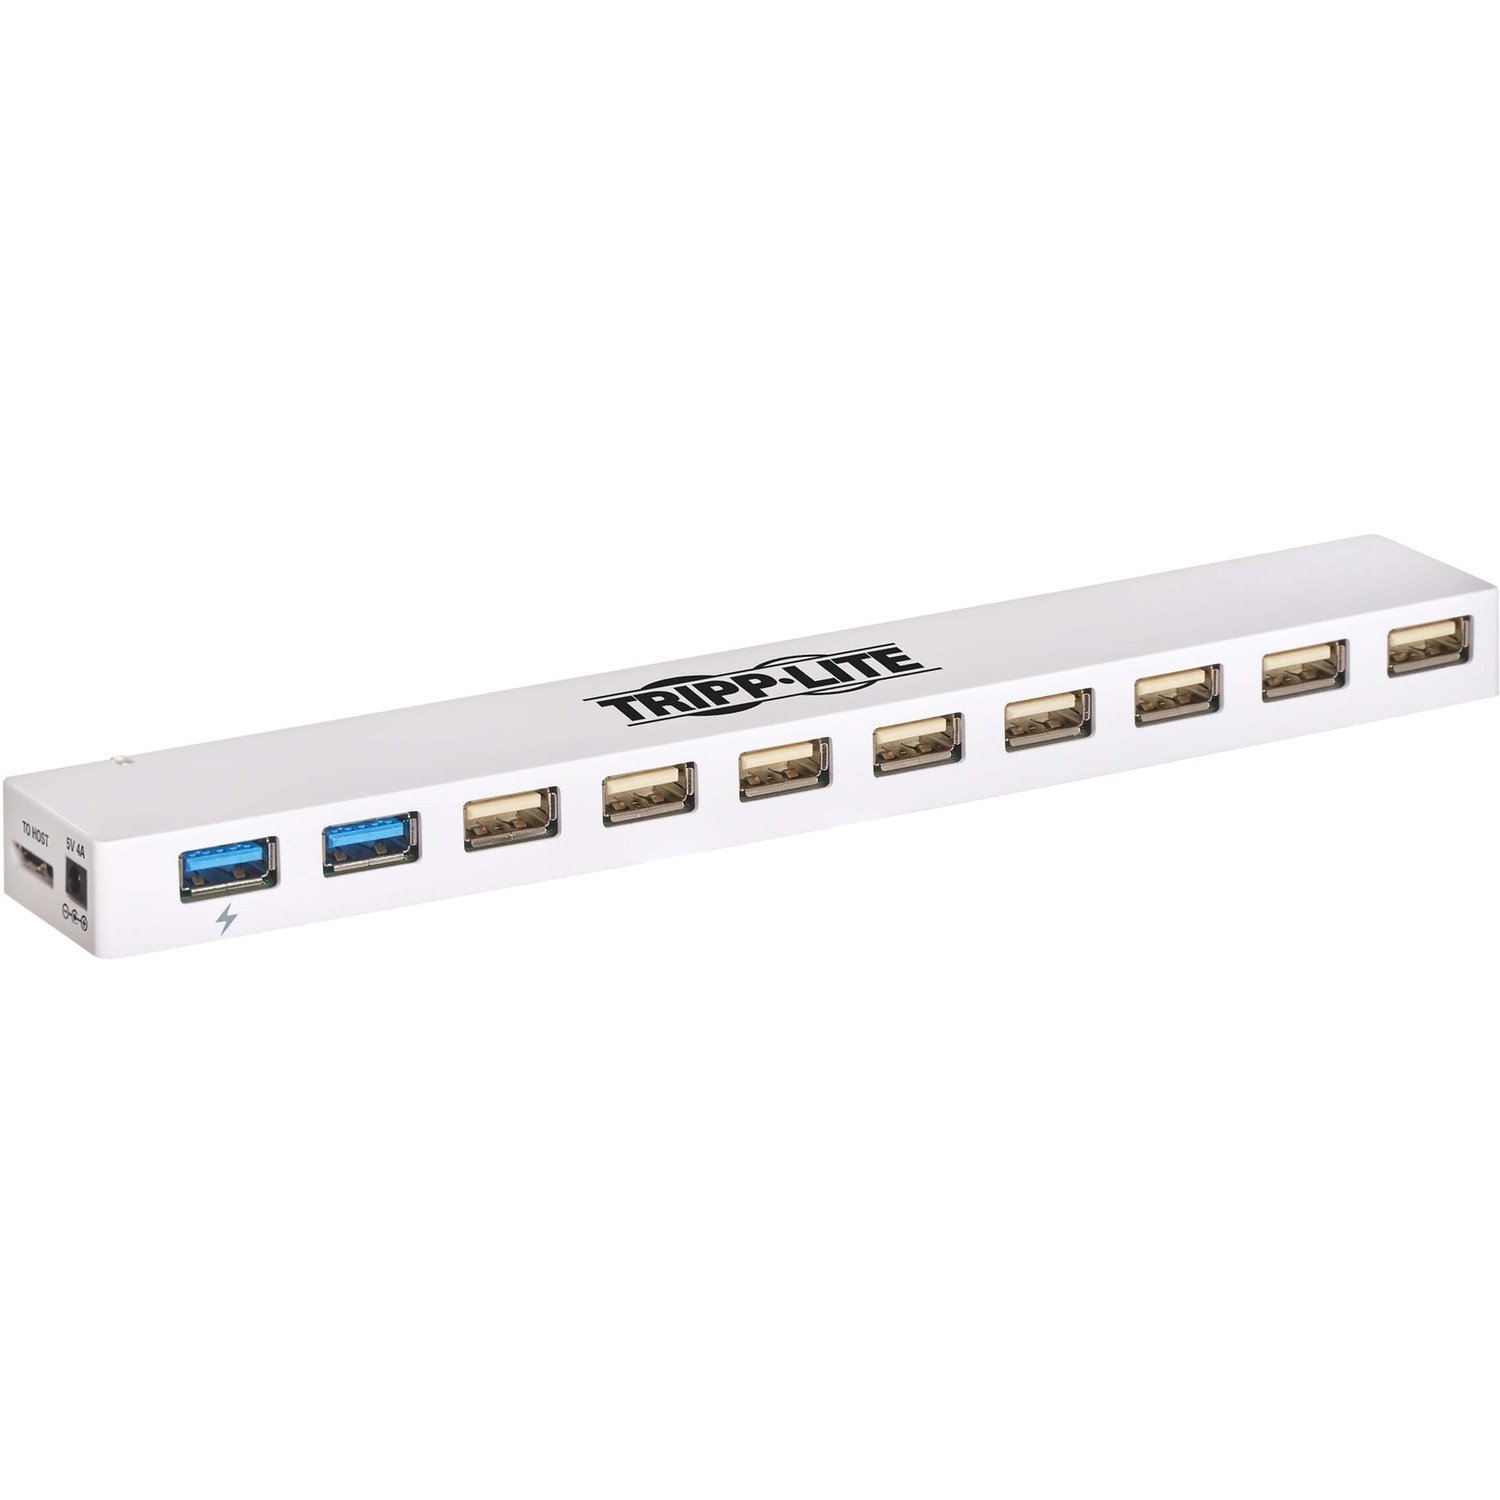 Tripp Lite by Eaton 10-Port USB 3.x (5Gbps) / USB 2.0 Combo Hub - USB Charging, 2 USB 3.x & 8 USB 2.0 Ports